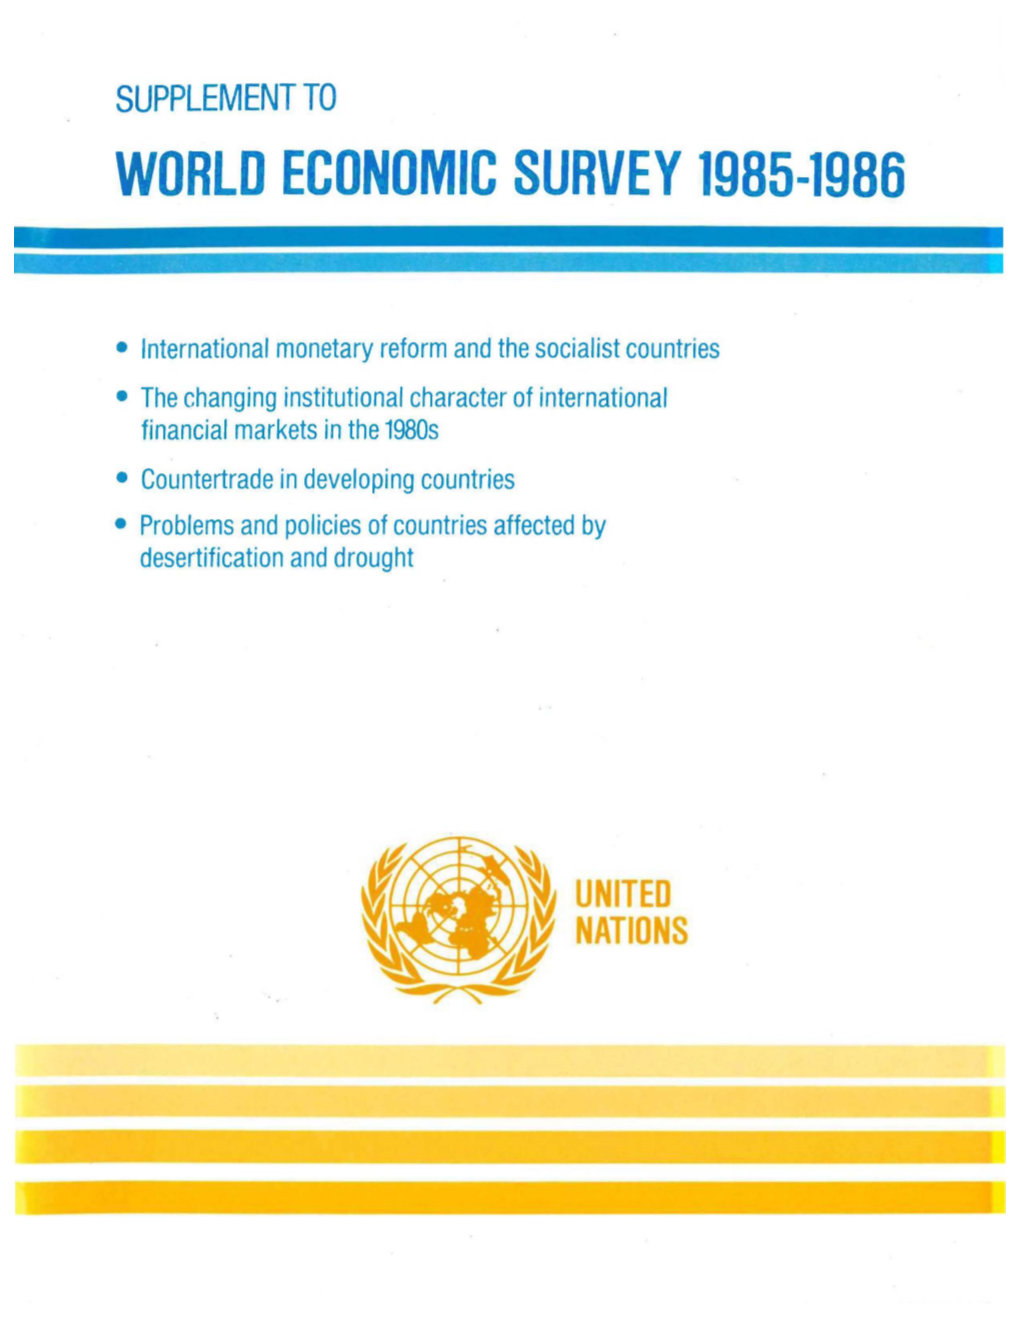 World Economic Survey 1985-1986